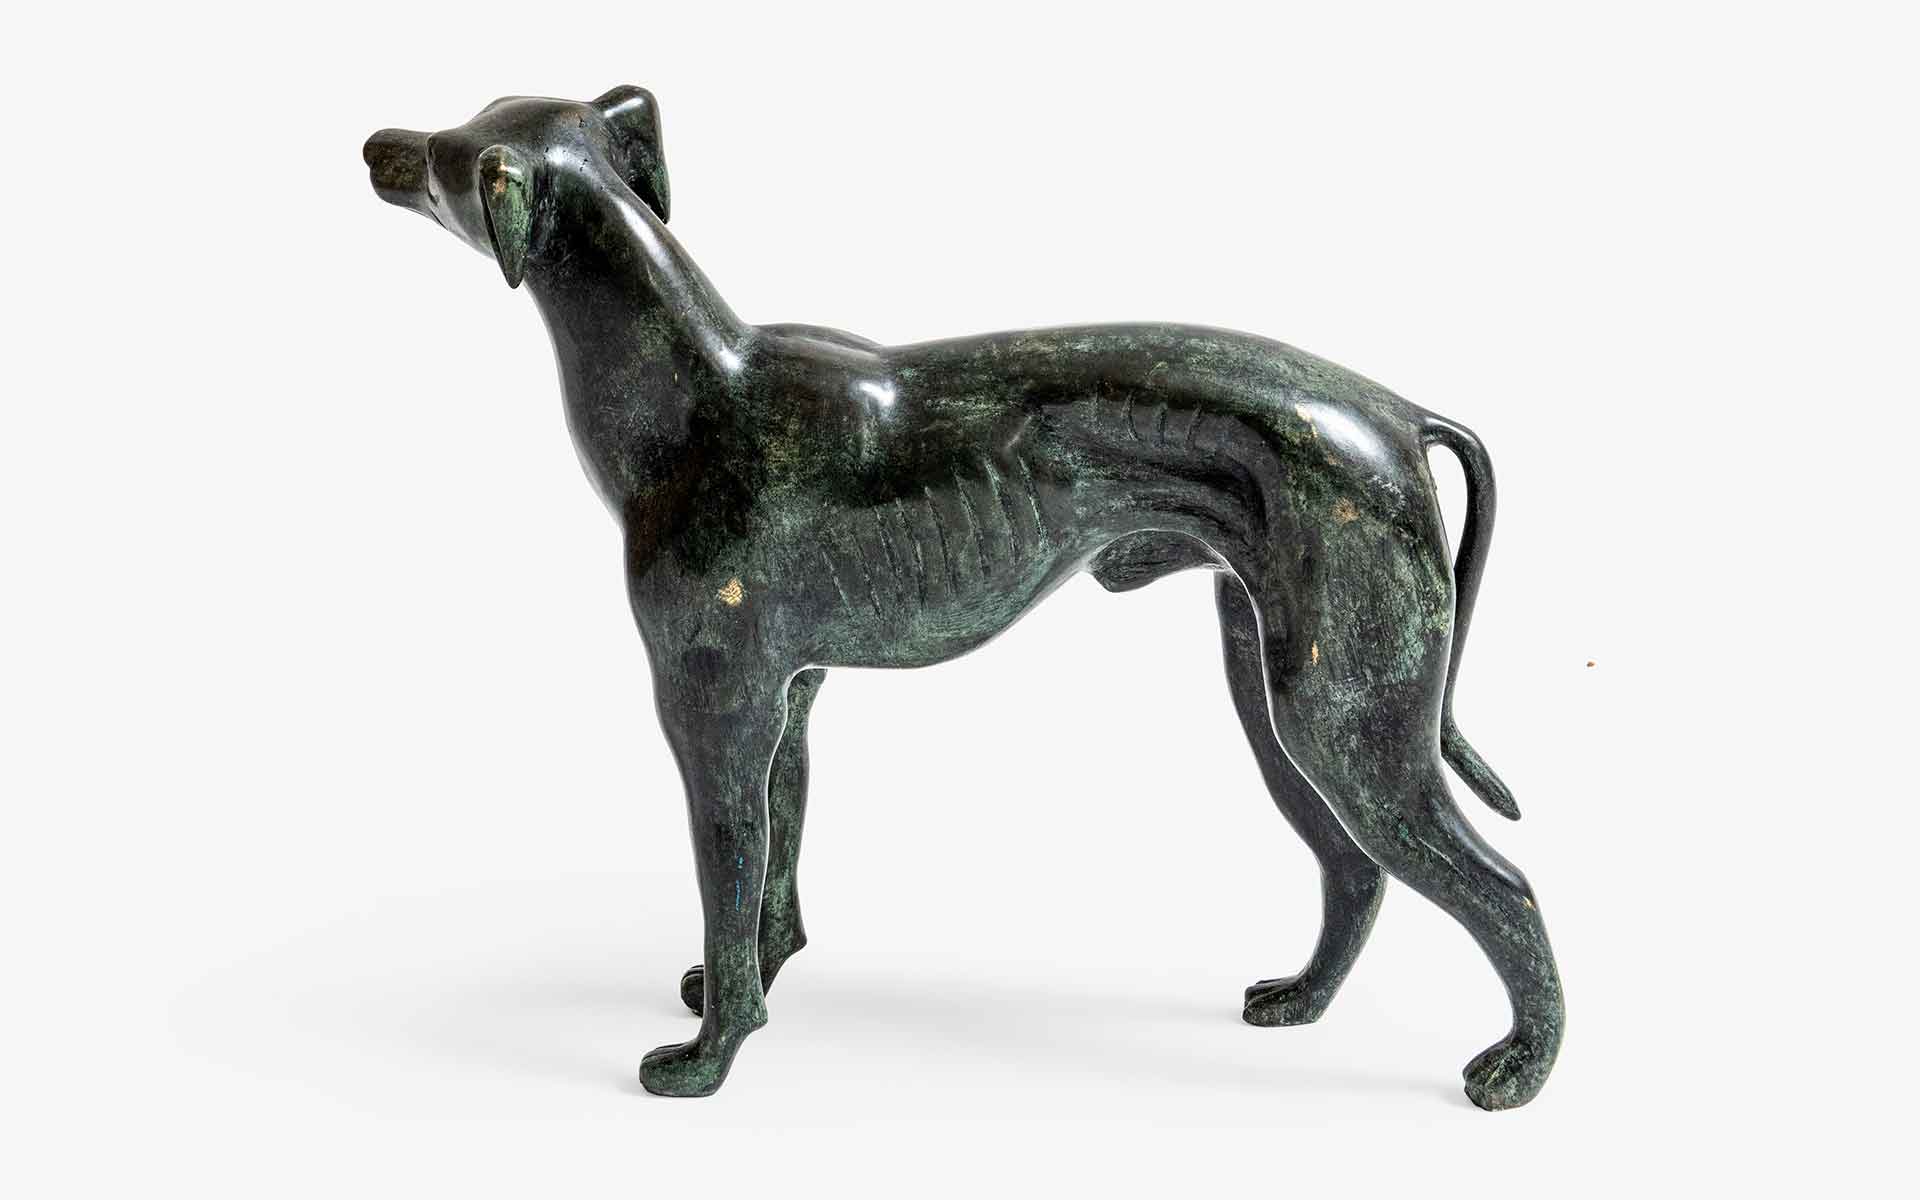 Bronze Dog Sculpture